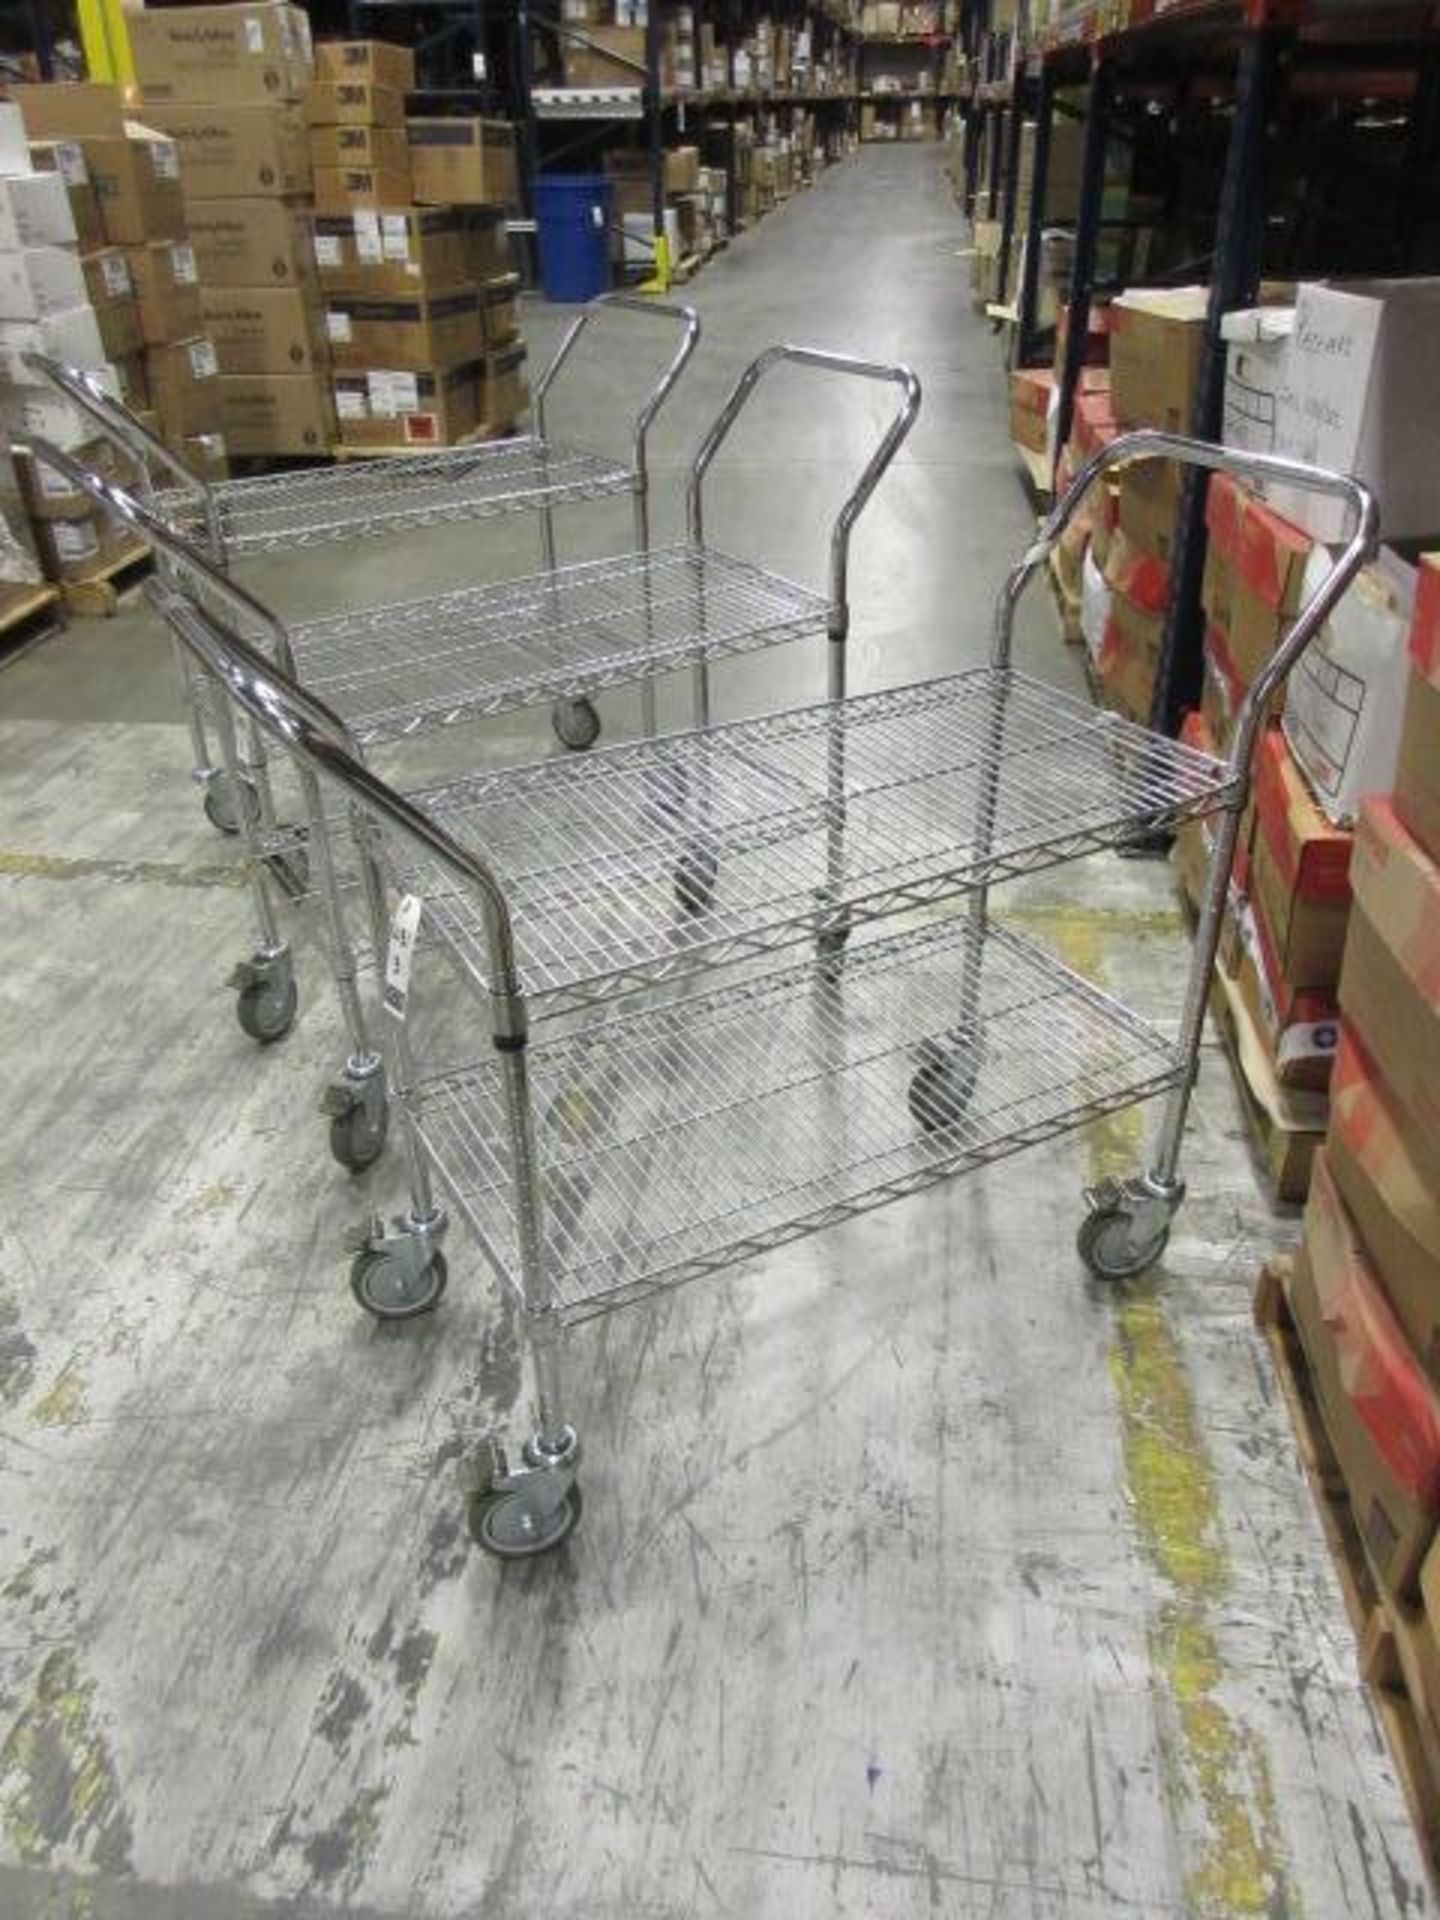 Uline 2-Shelf Wire Mesh Carts - Image 2 of 4